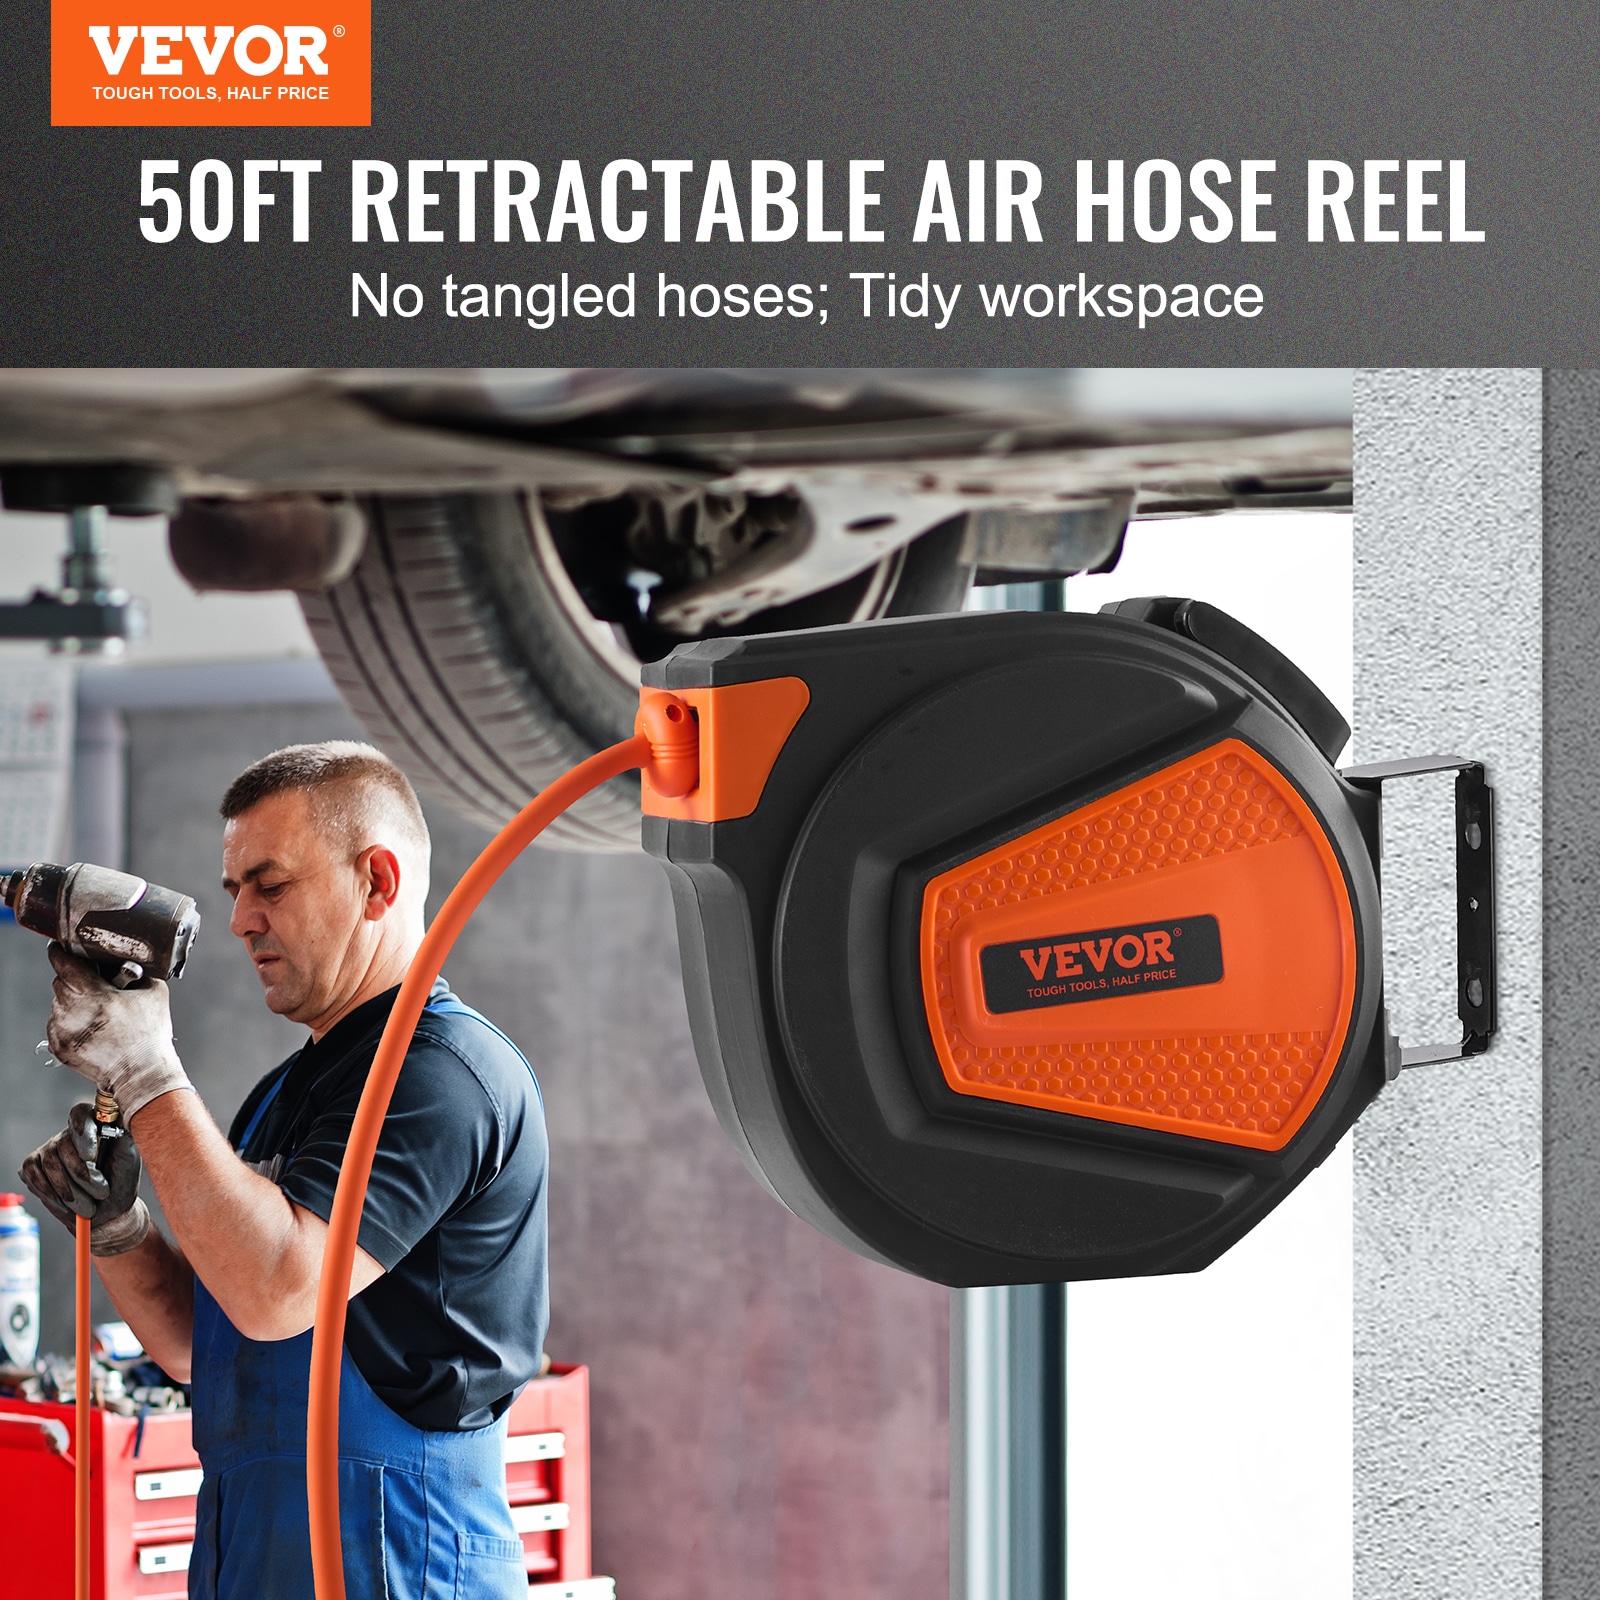 VEVOR Retractable Air Hose Reel in the Air Compressor Hoses department at